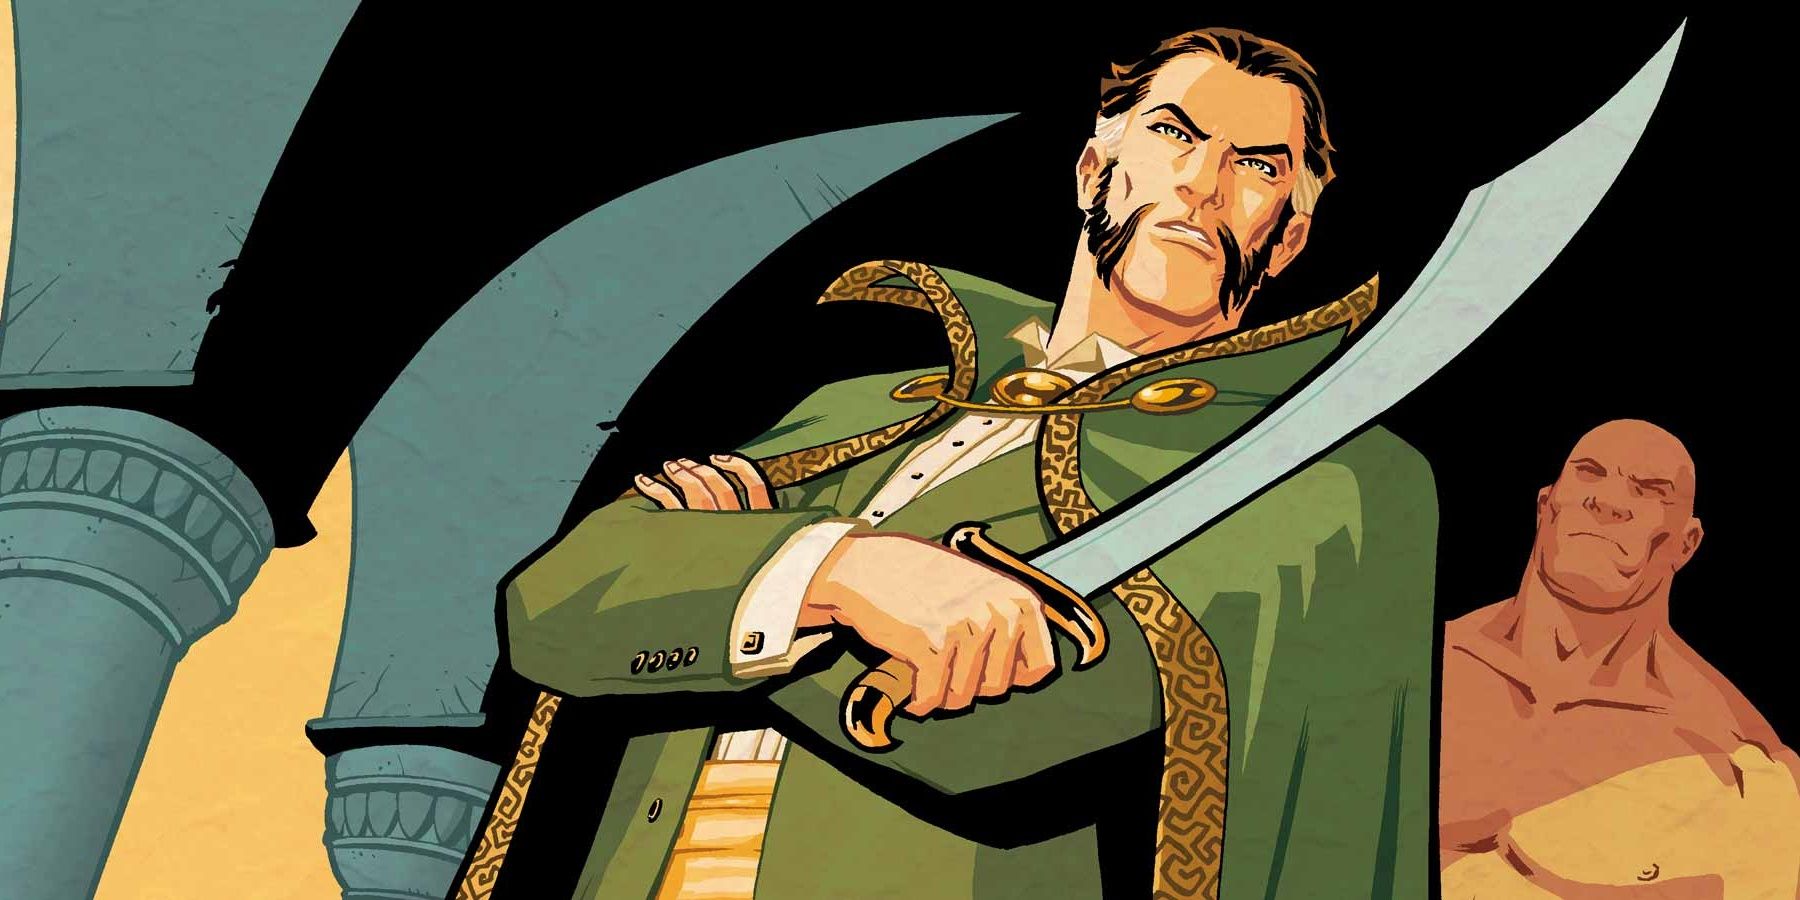 image of the Batman villain Ras al Ghul wearing a green cape while holding an Arabian sword